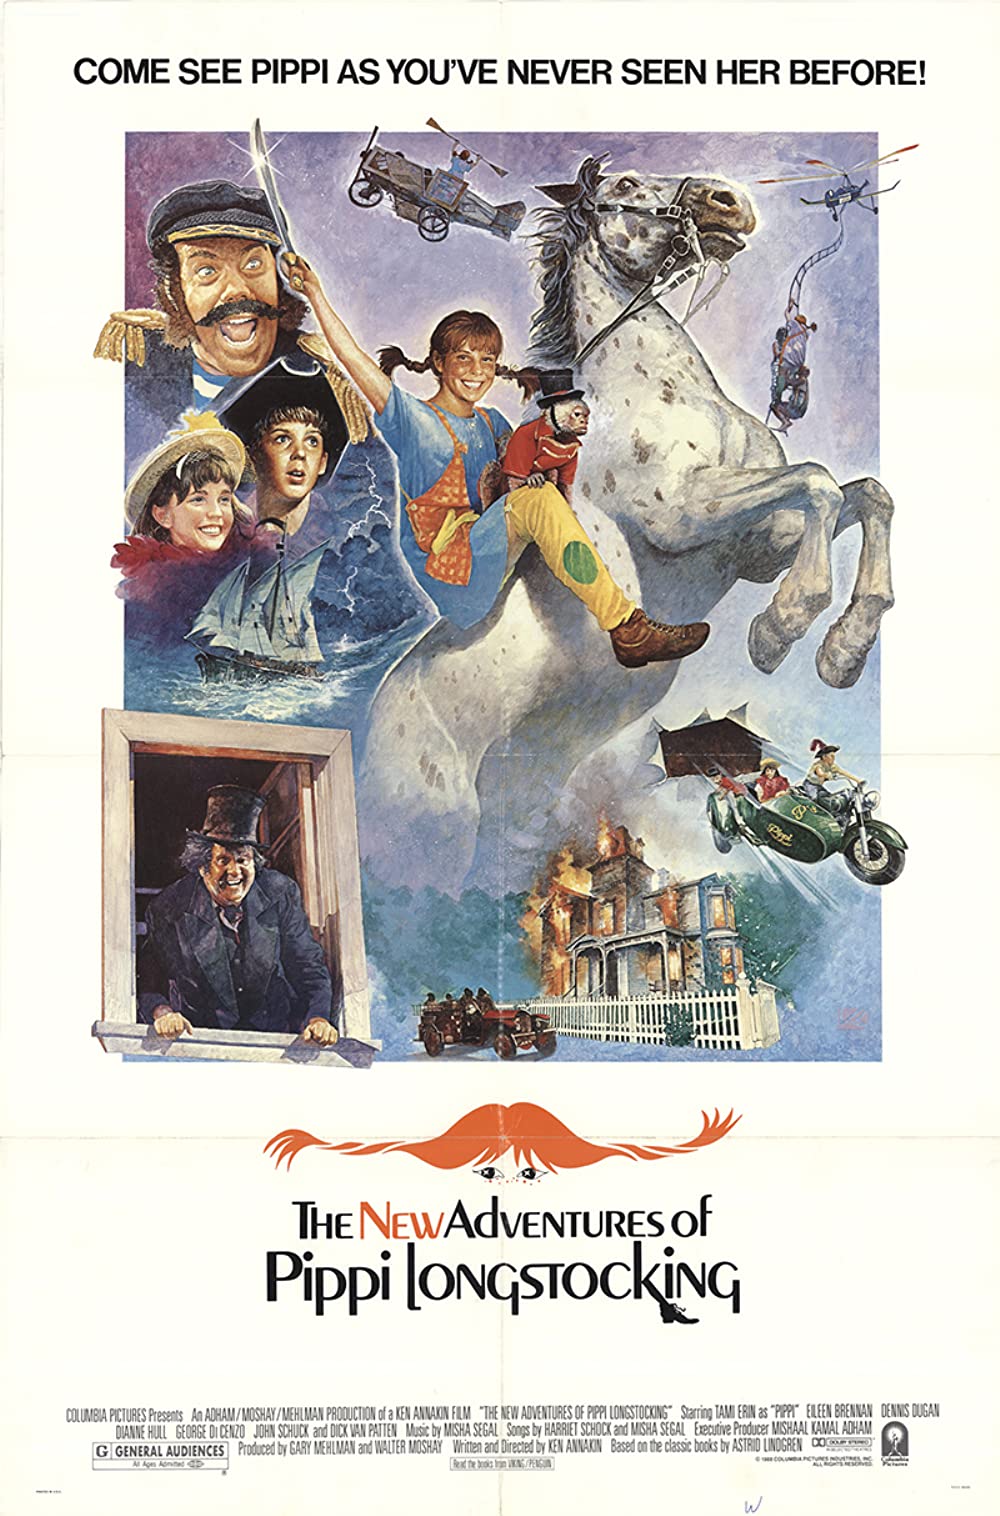 Filmbeschreibung zu The New Adventures of Pippi Longstocking